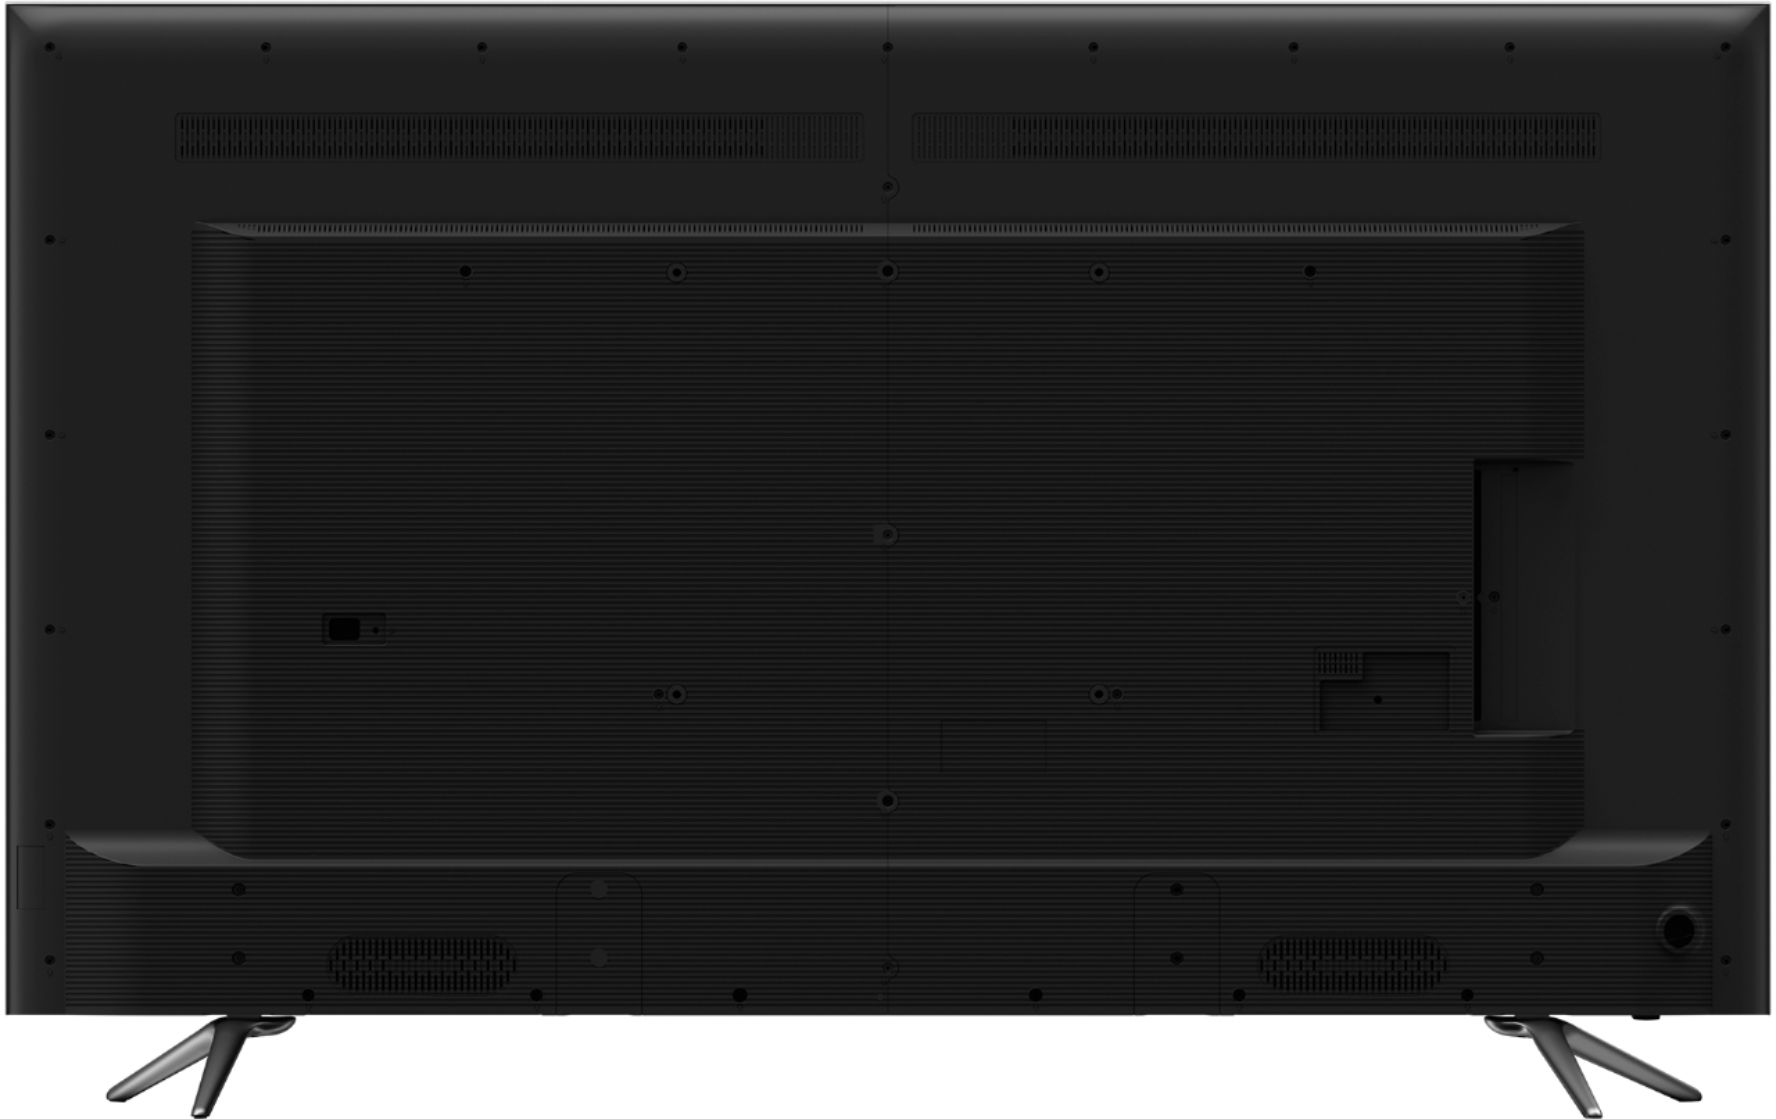 Back View: Samsung - 65" Class 6 Series LED 4K UHD Smart Tizen TV